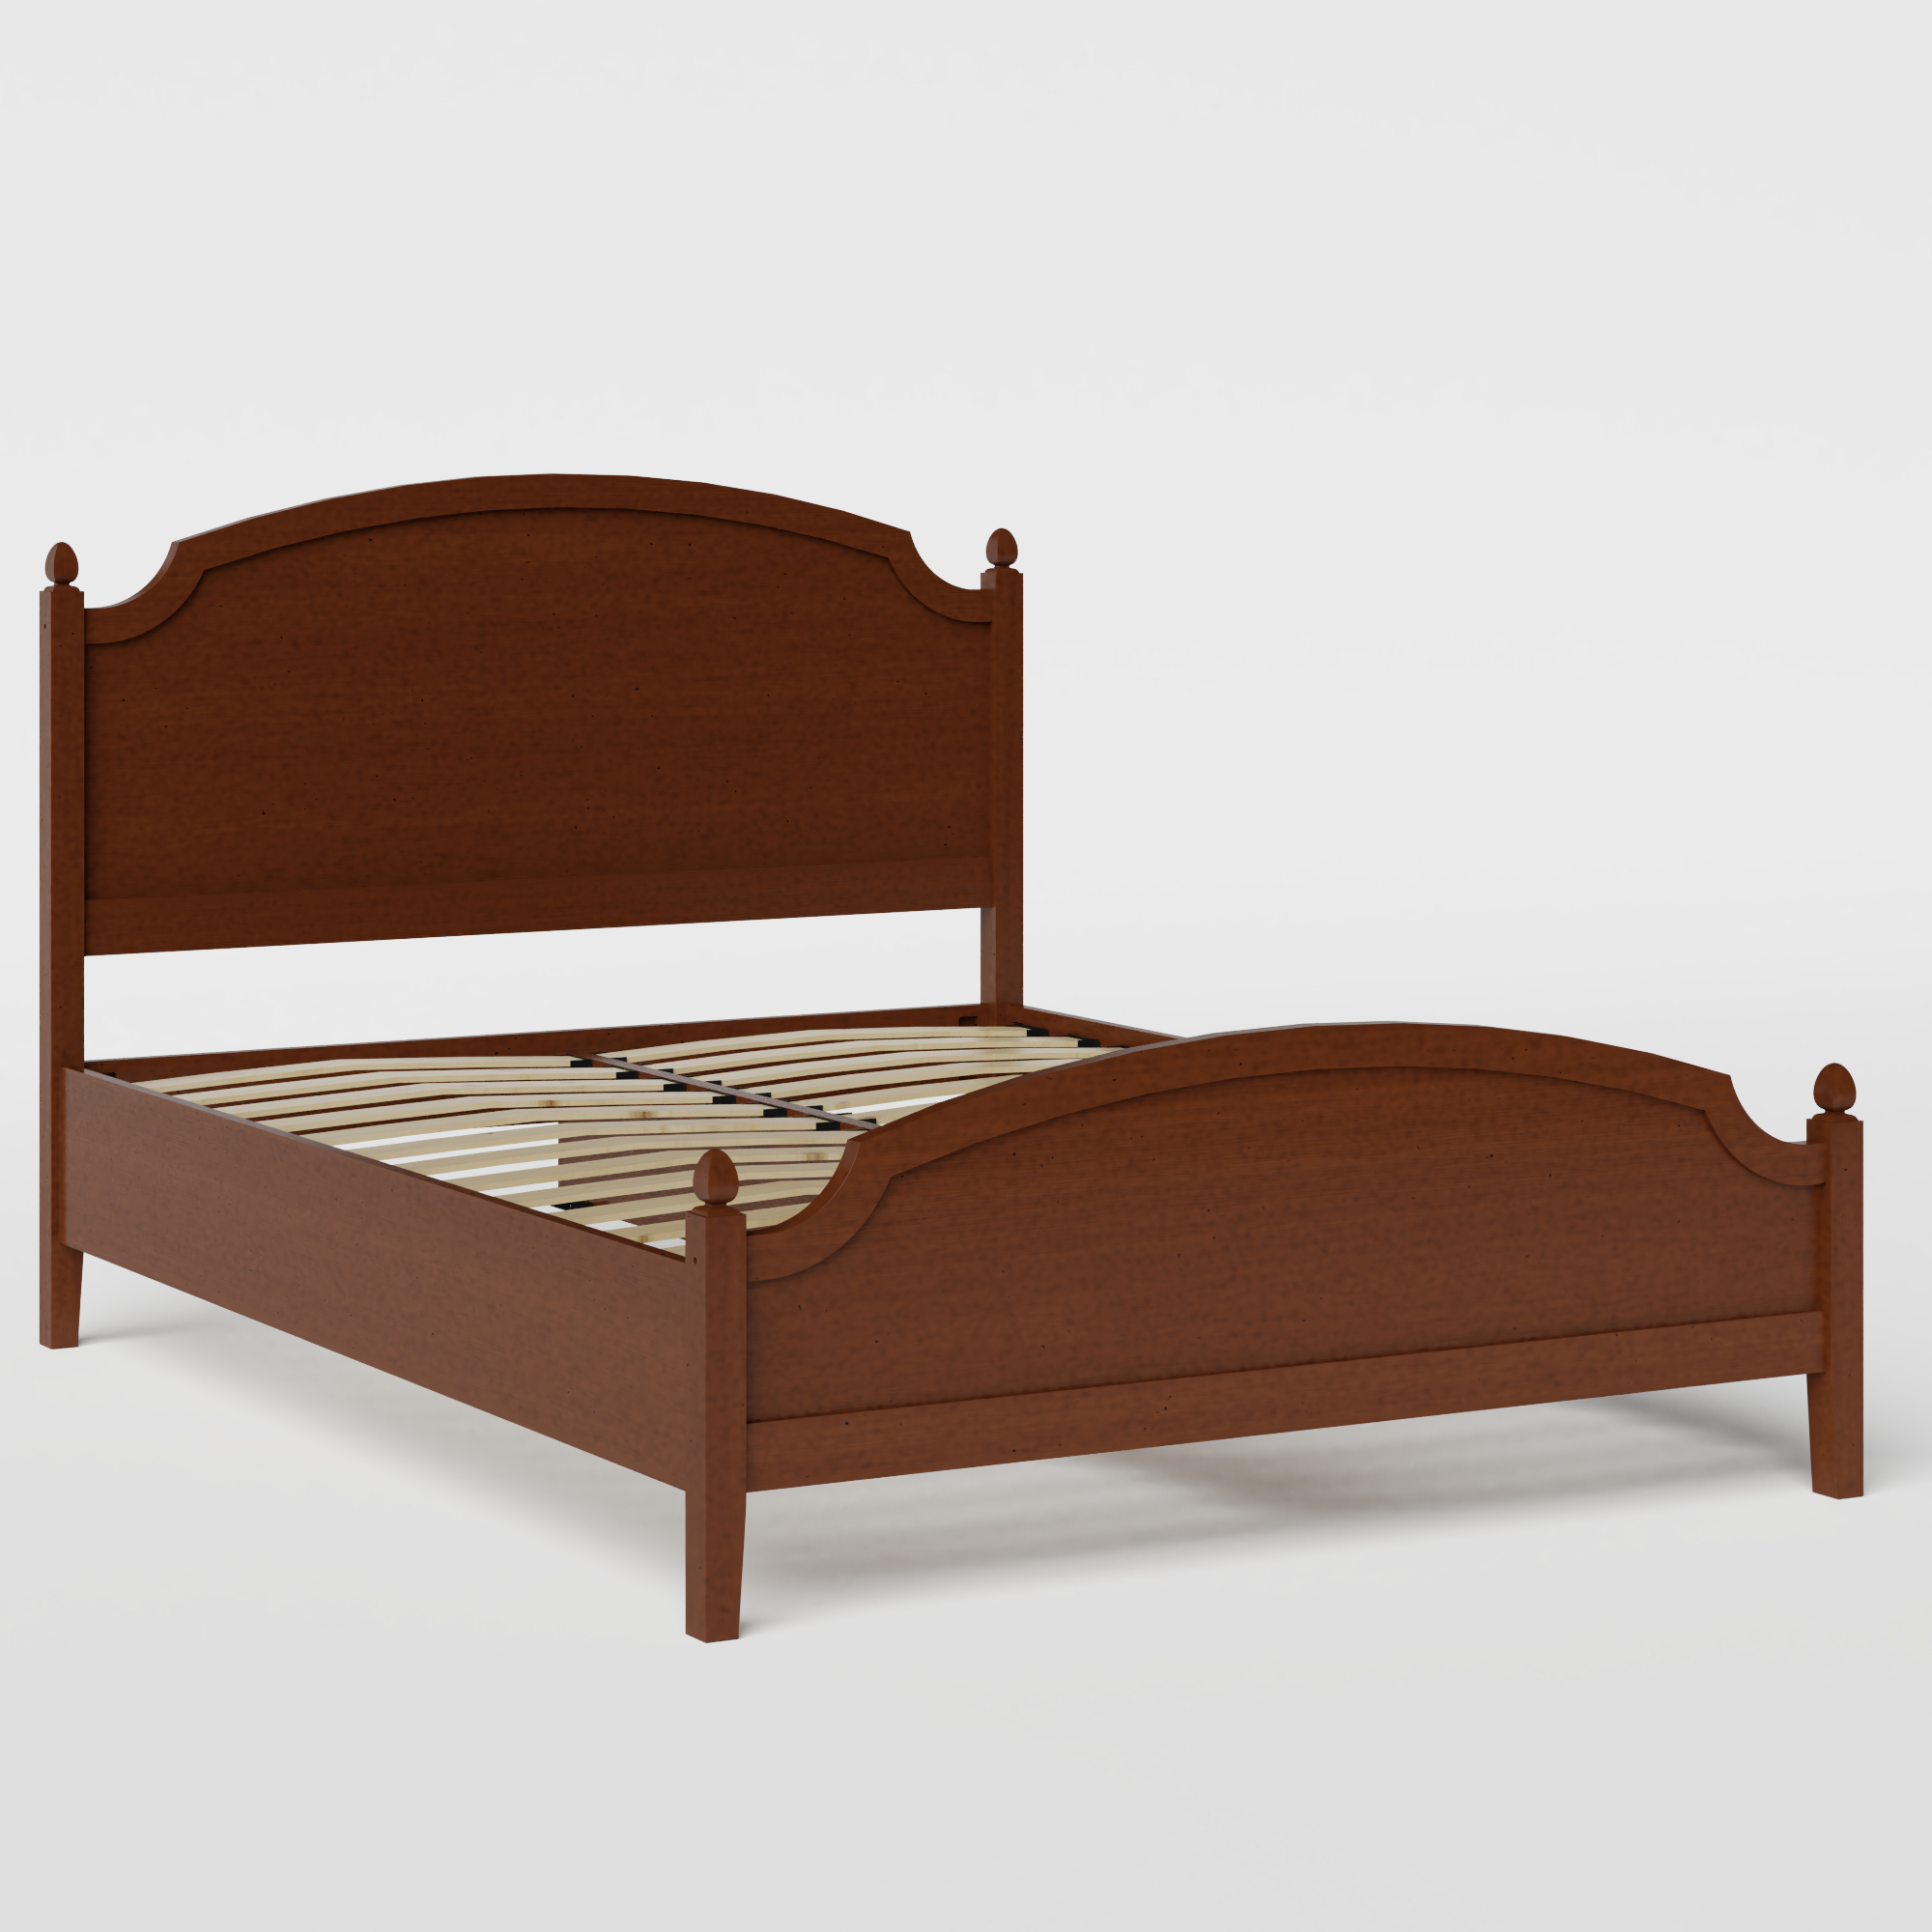 Kipling Low Footend houten bed in dark cherry